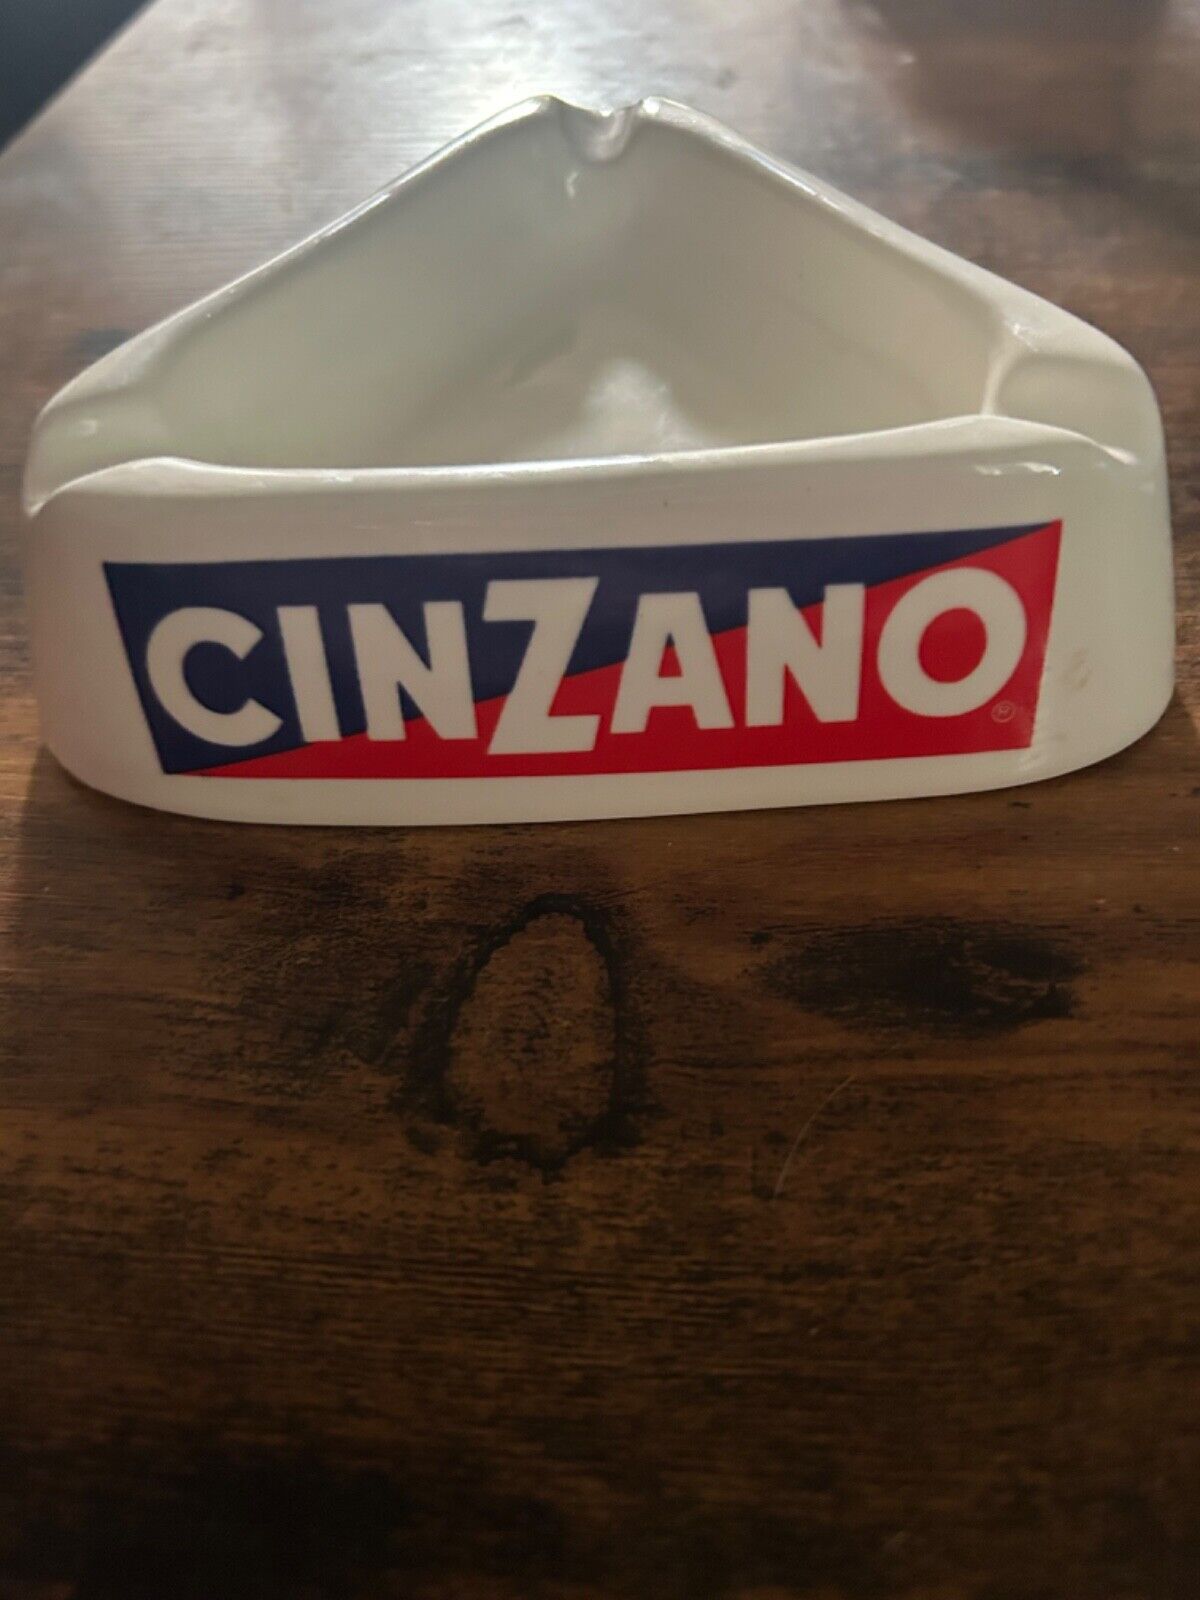  Vintage Cinzano Ashtray made in Italy 1980 glass ashtray never used 